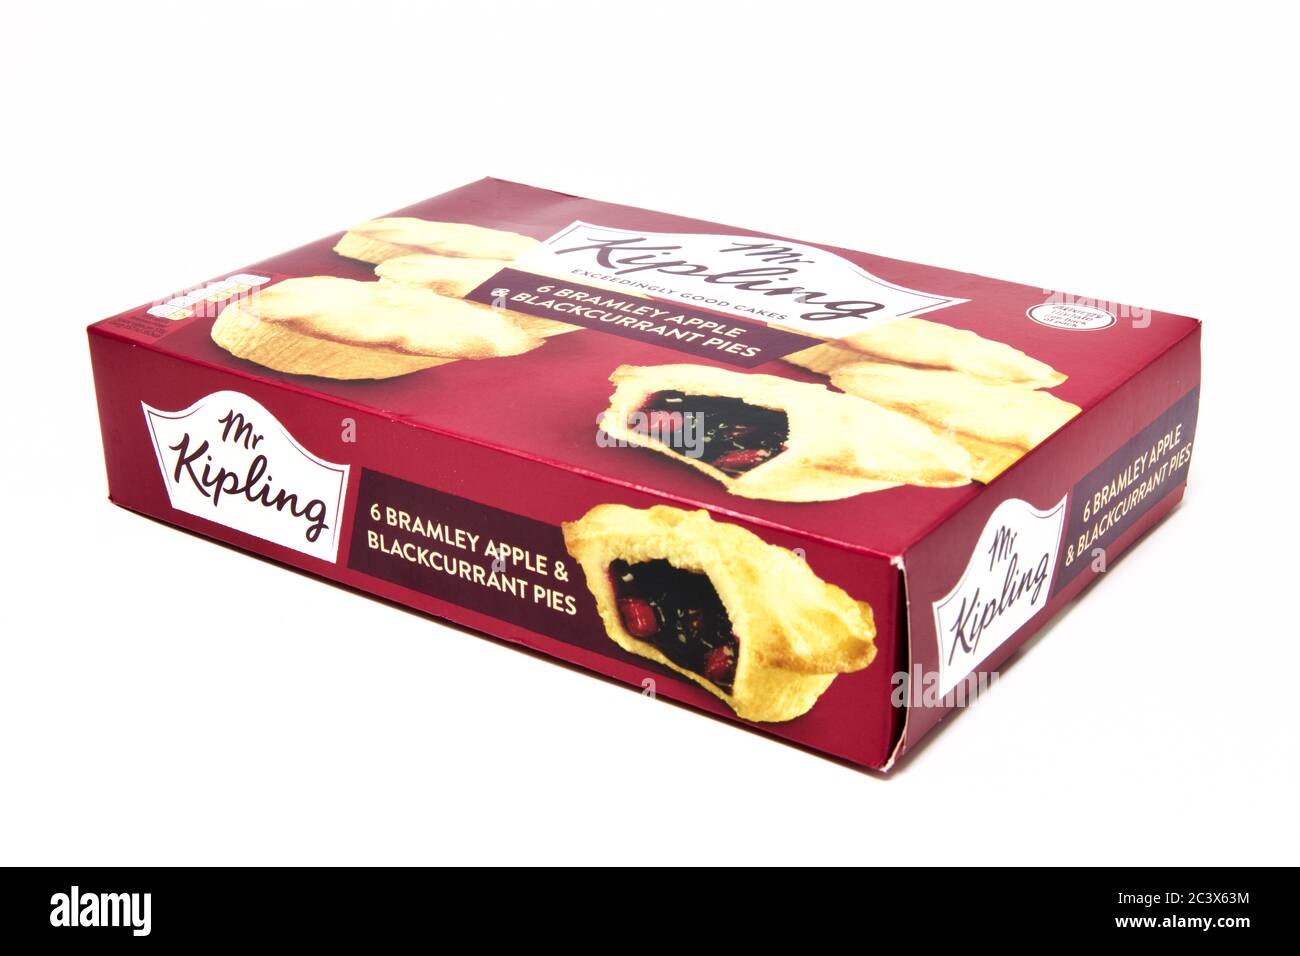 Mr Kipling 6 Bramley Apple & Blackcurrant Pies Stock Photo - Alamy